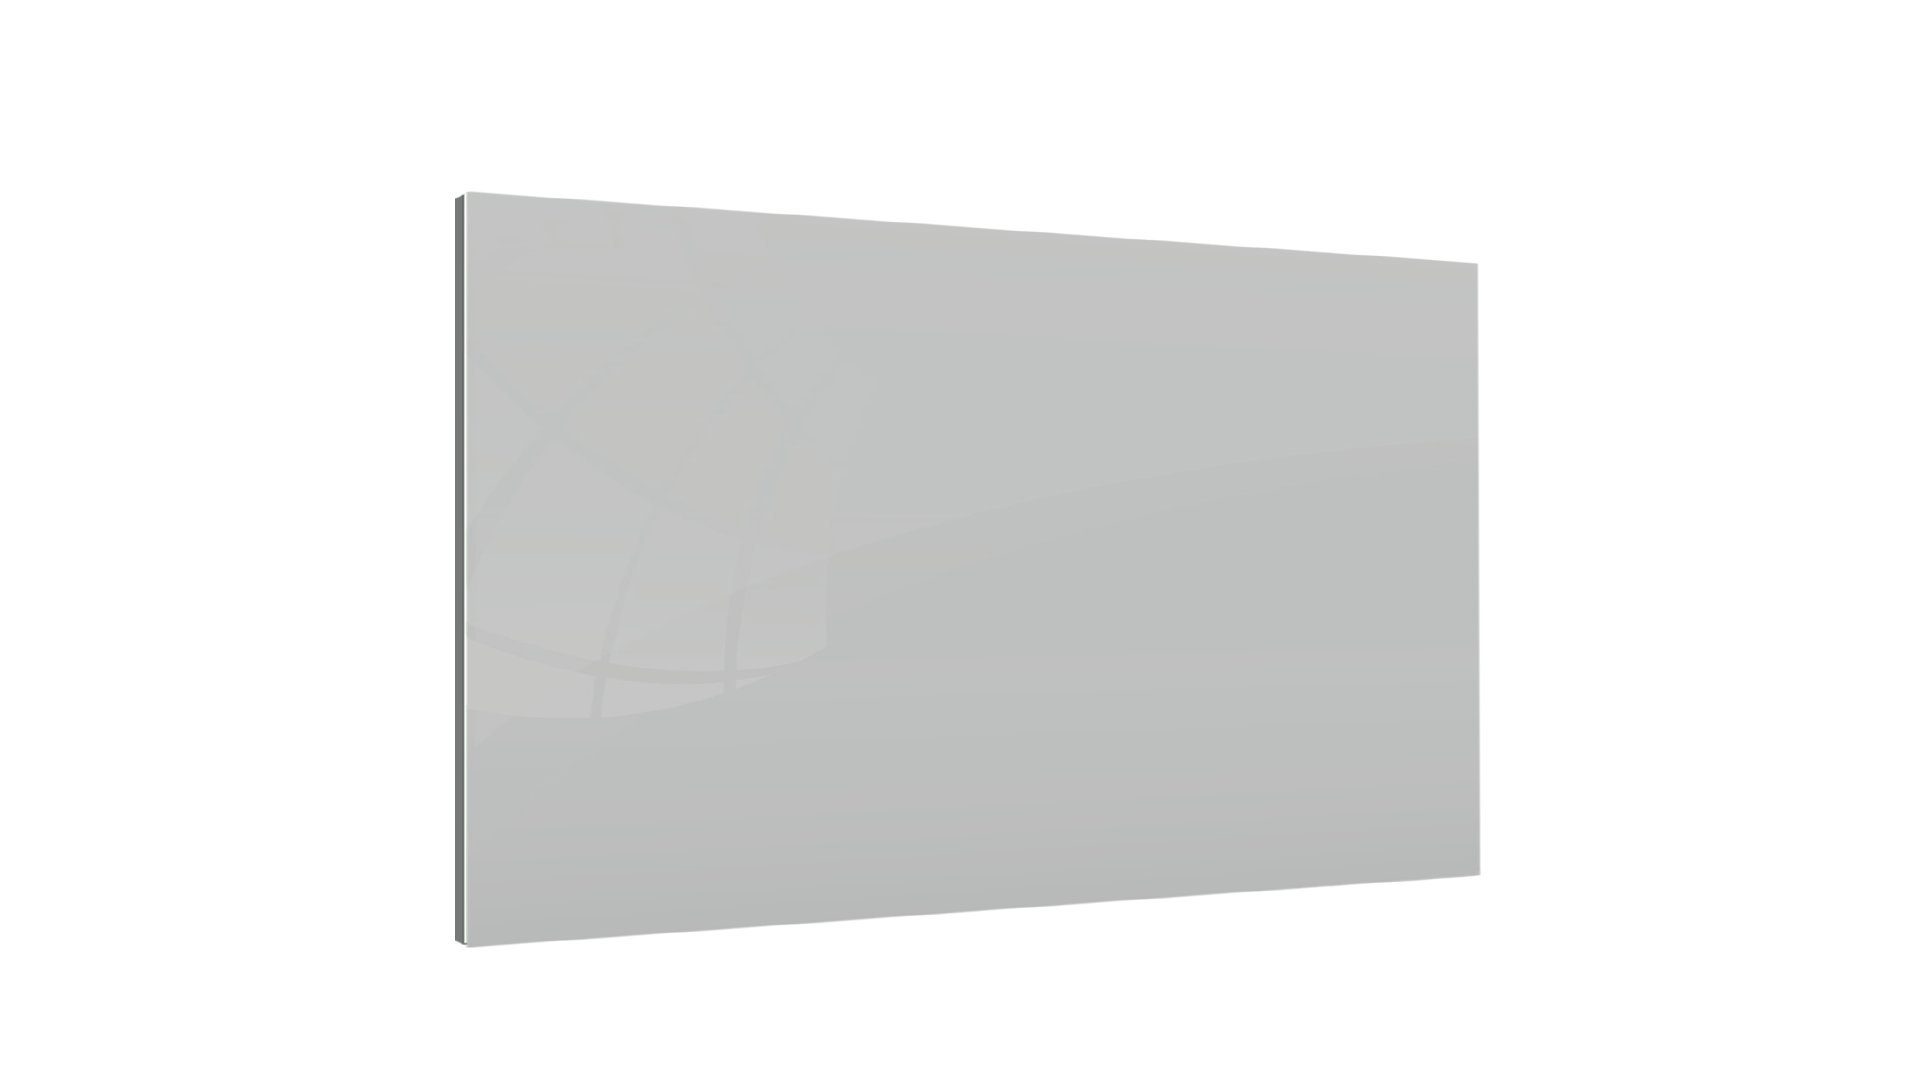 ALLboards Memoboard Magnetische Glastafel grau - rahmenlose Glastafel